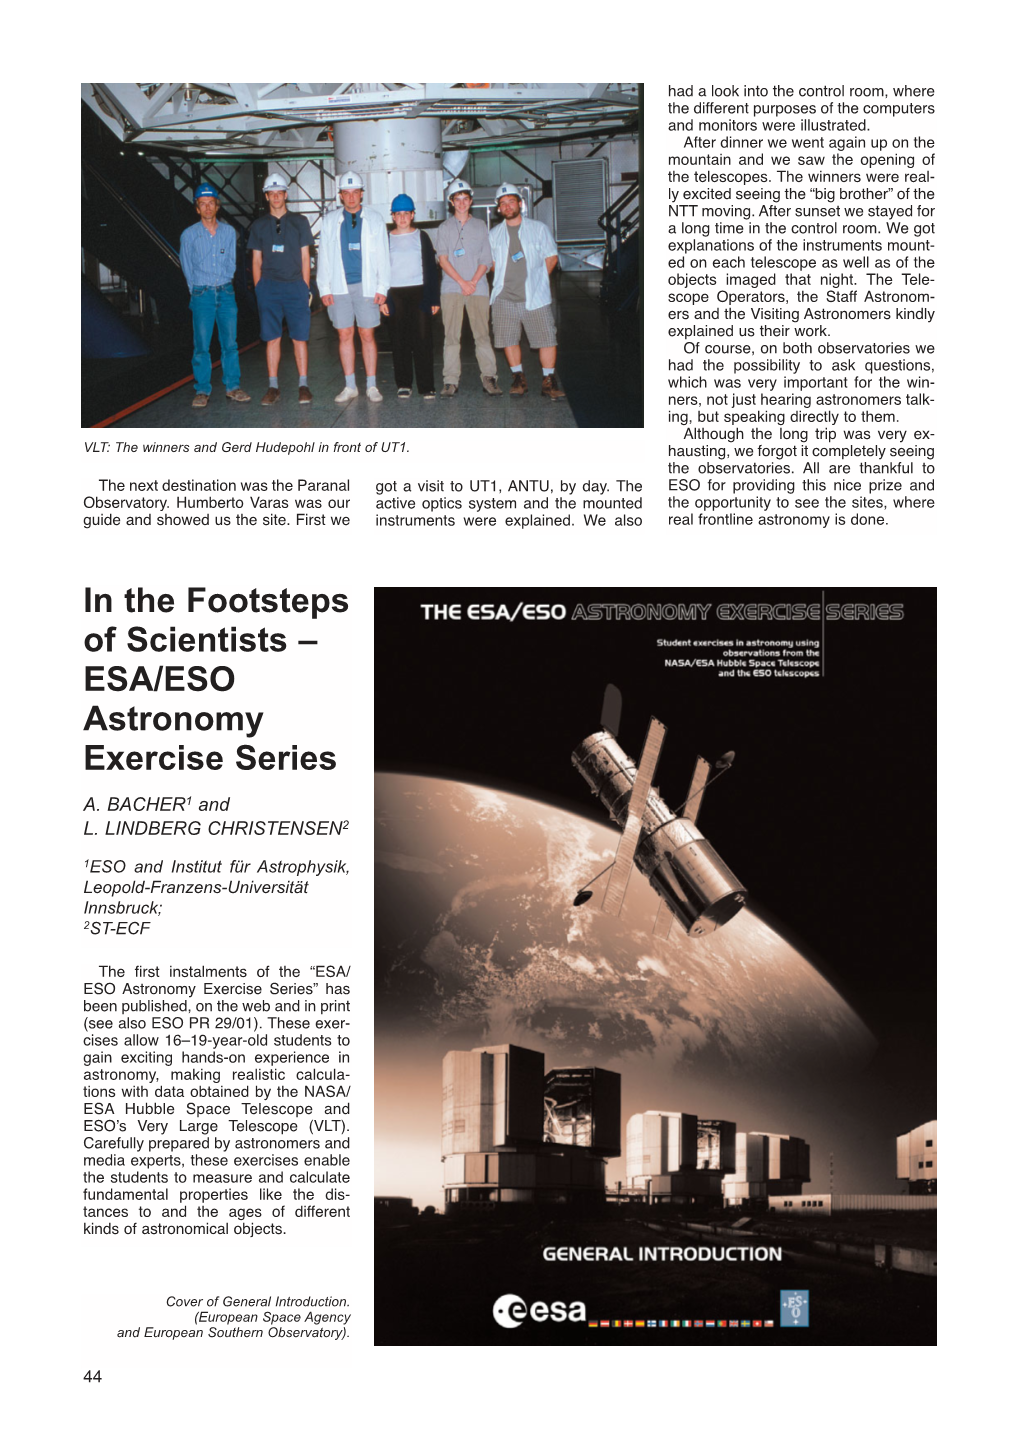 ESA/ESO Astronomy Exercise Series A